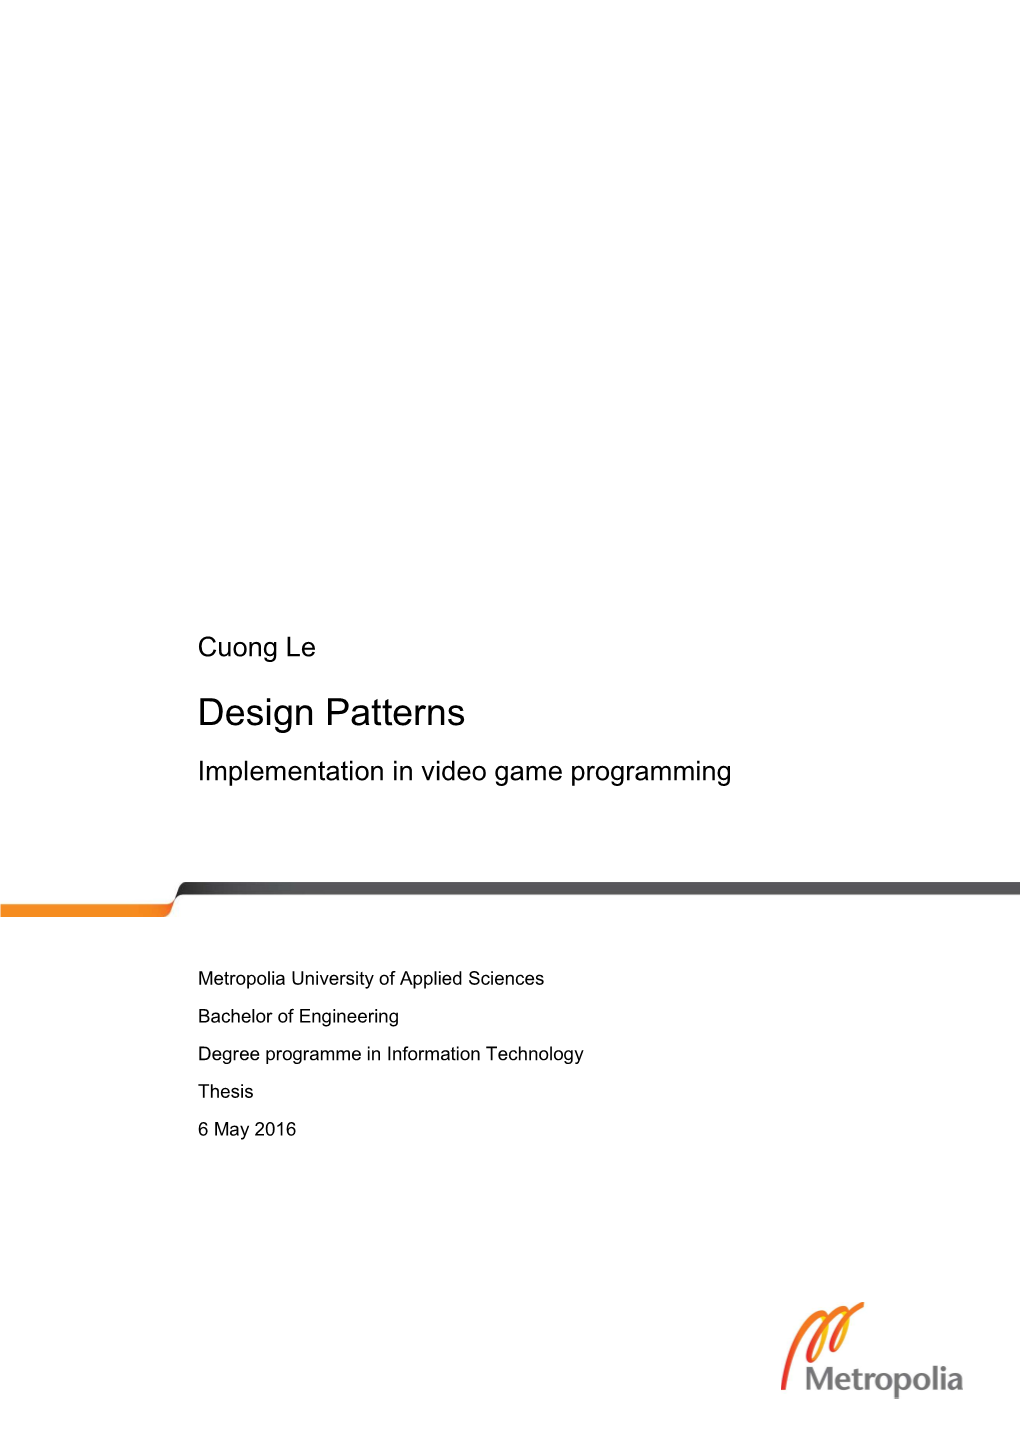 Design Patterns Implementation in Video Game Programming